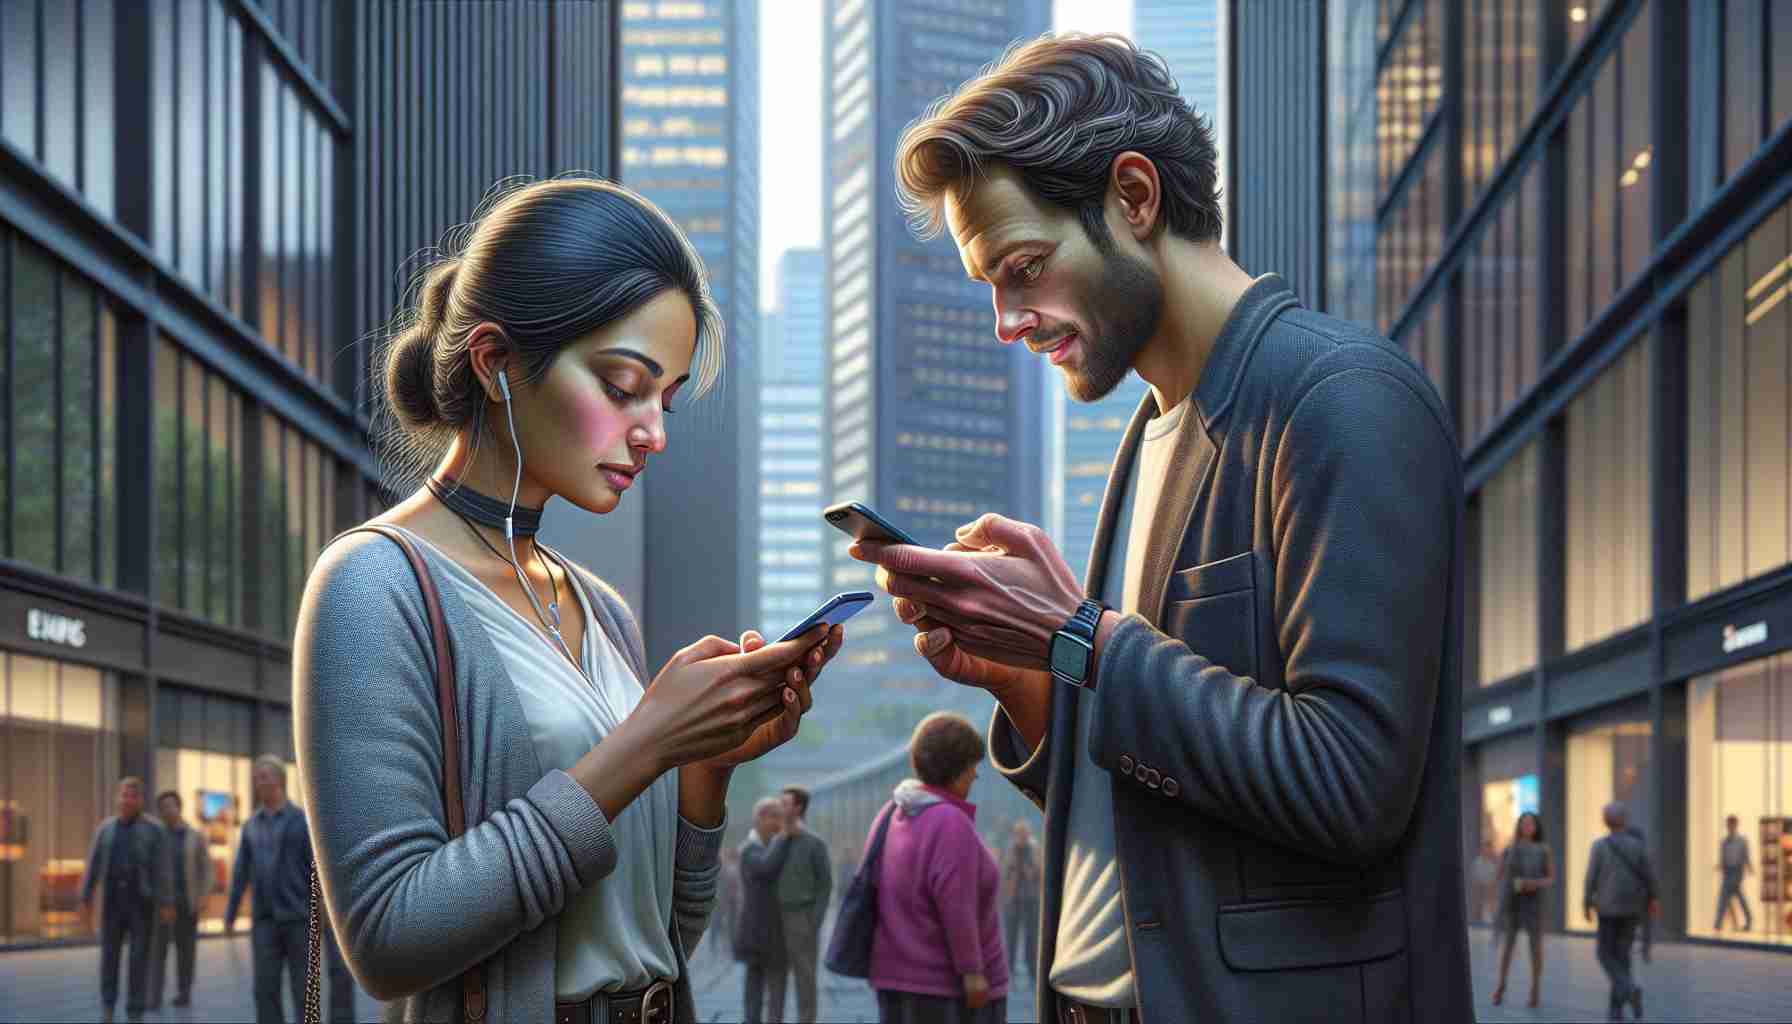 Smartphones‘ Grip on Modern Interactions